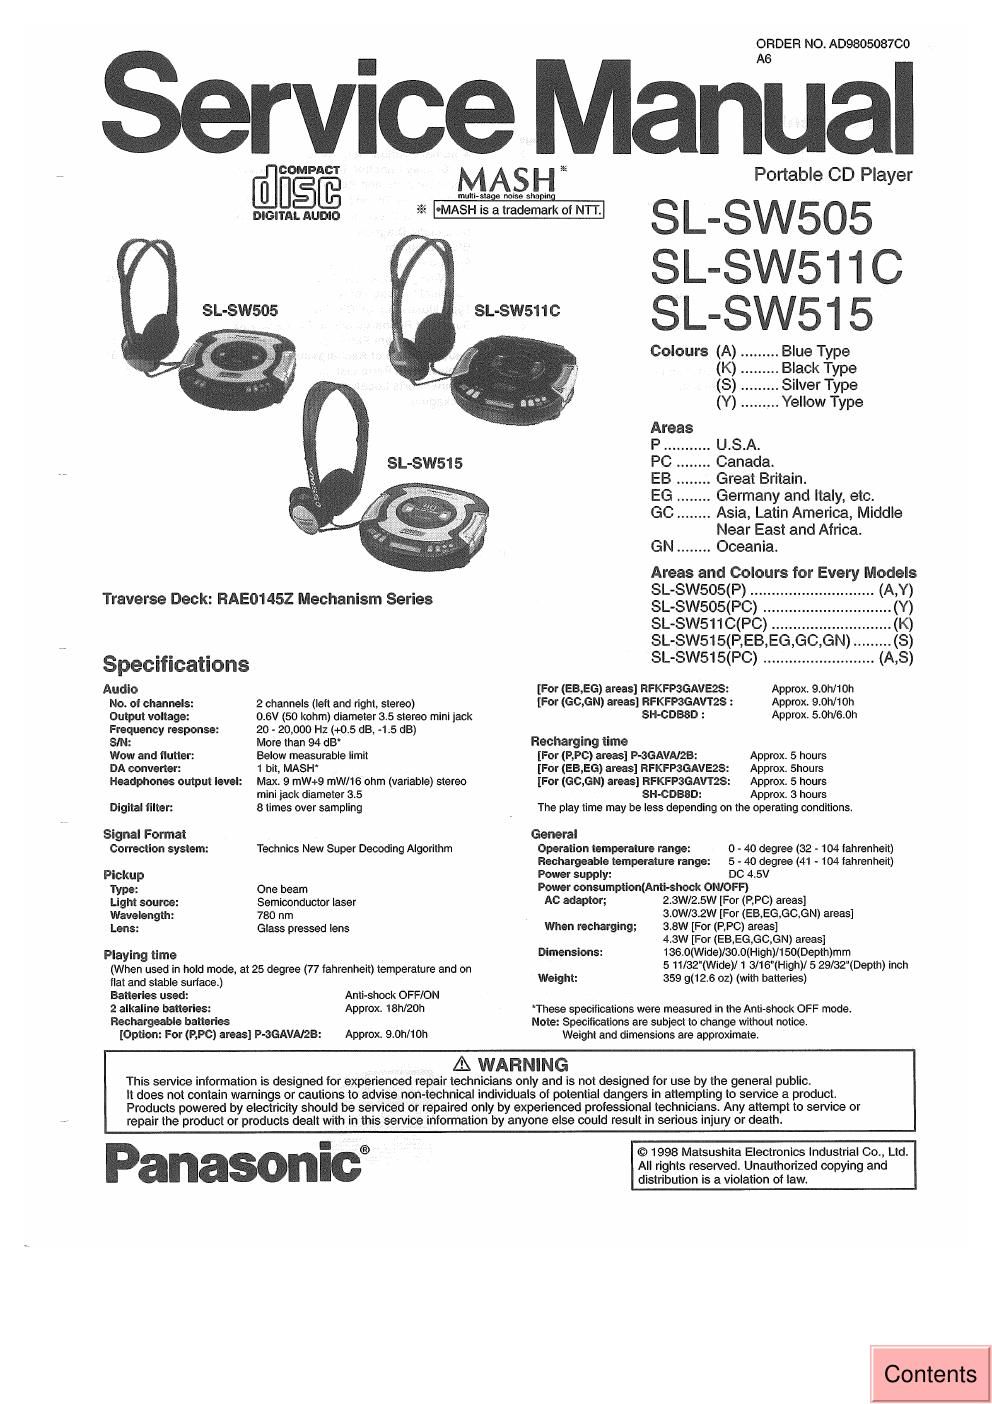 panasonic sl sw 505 service manual